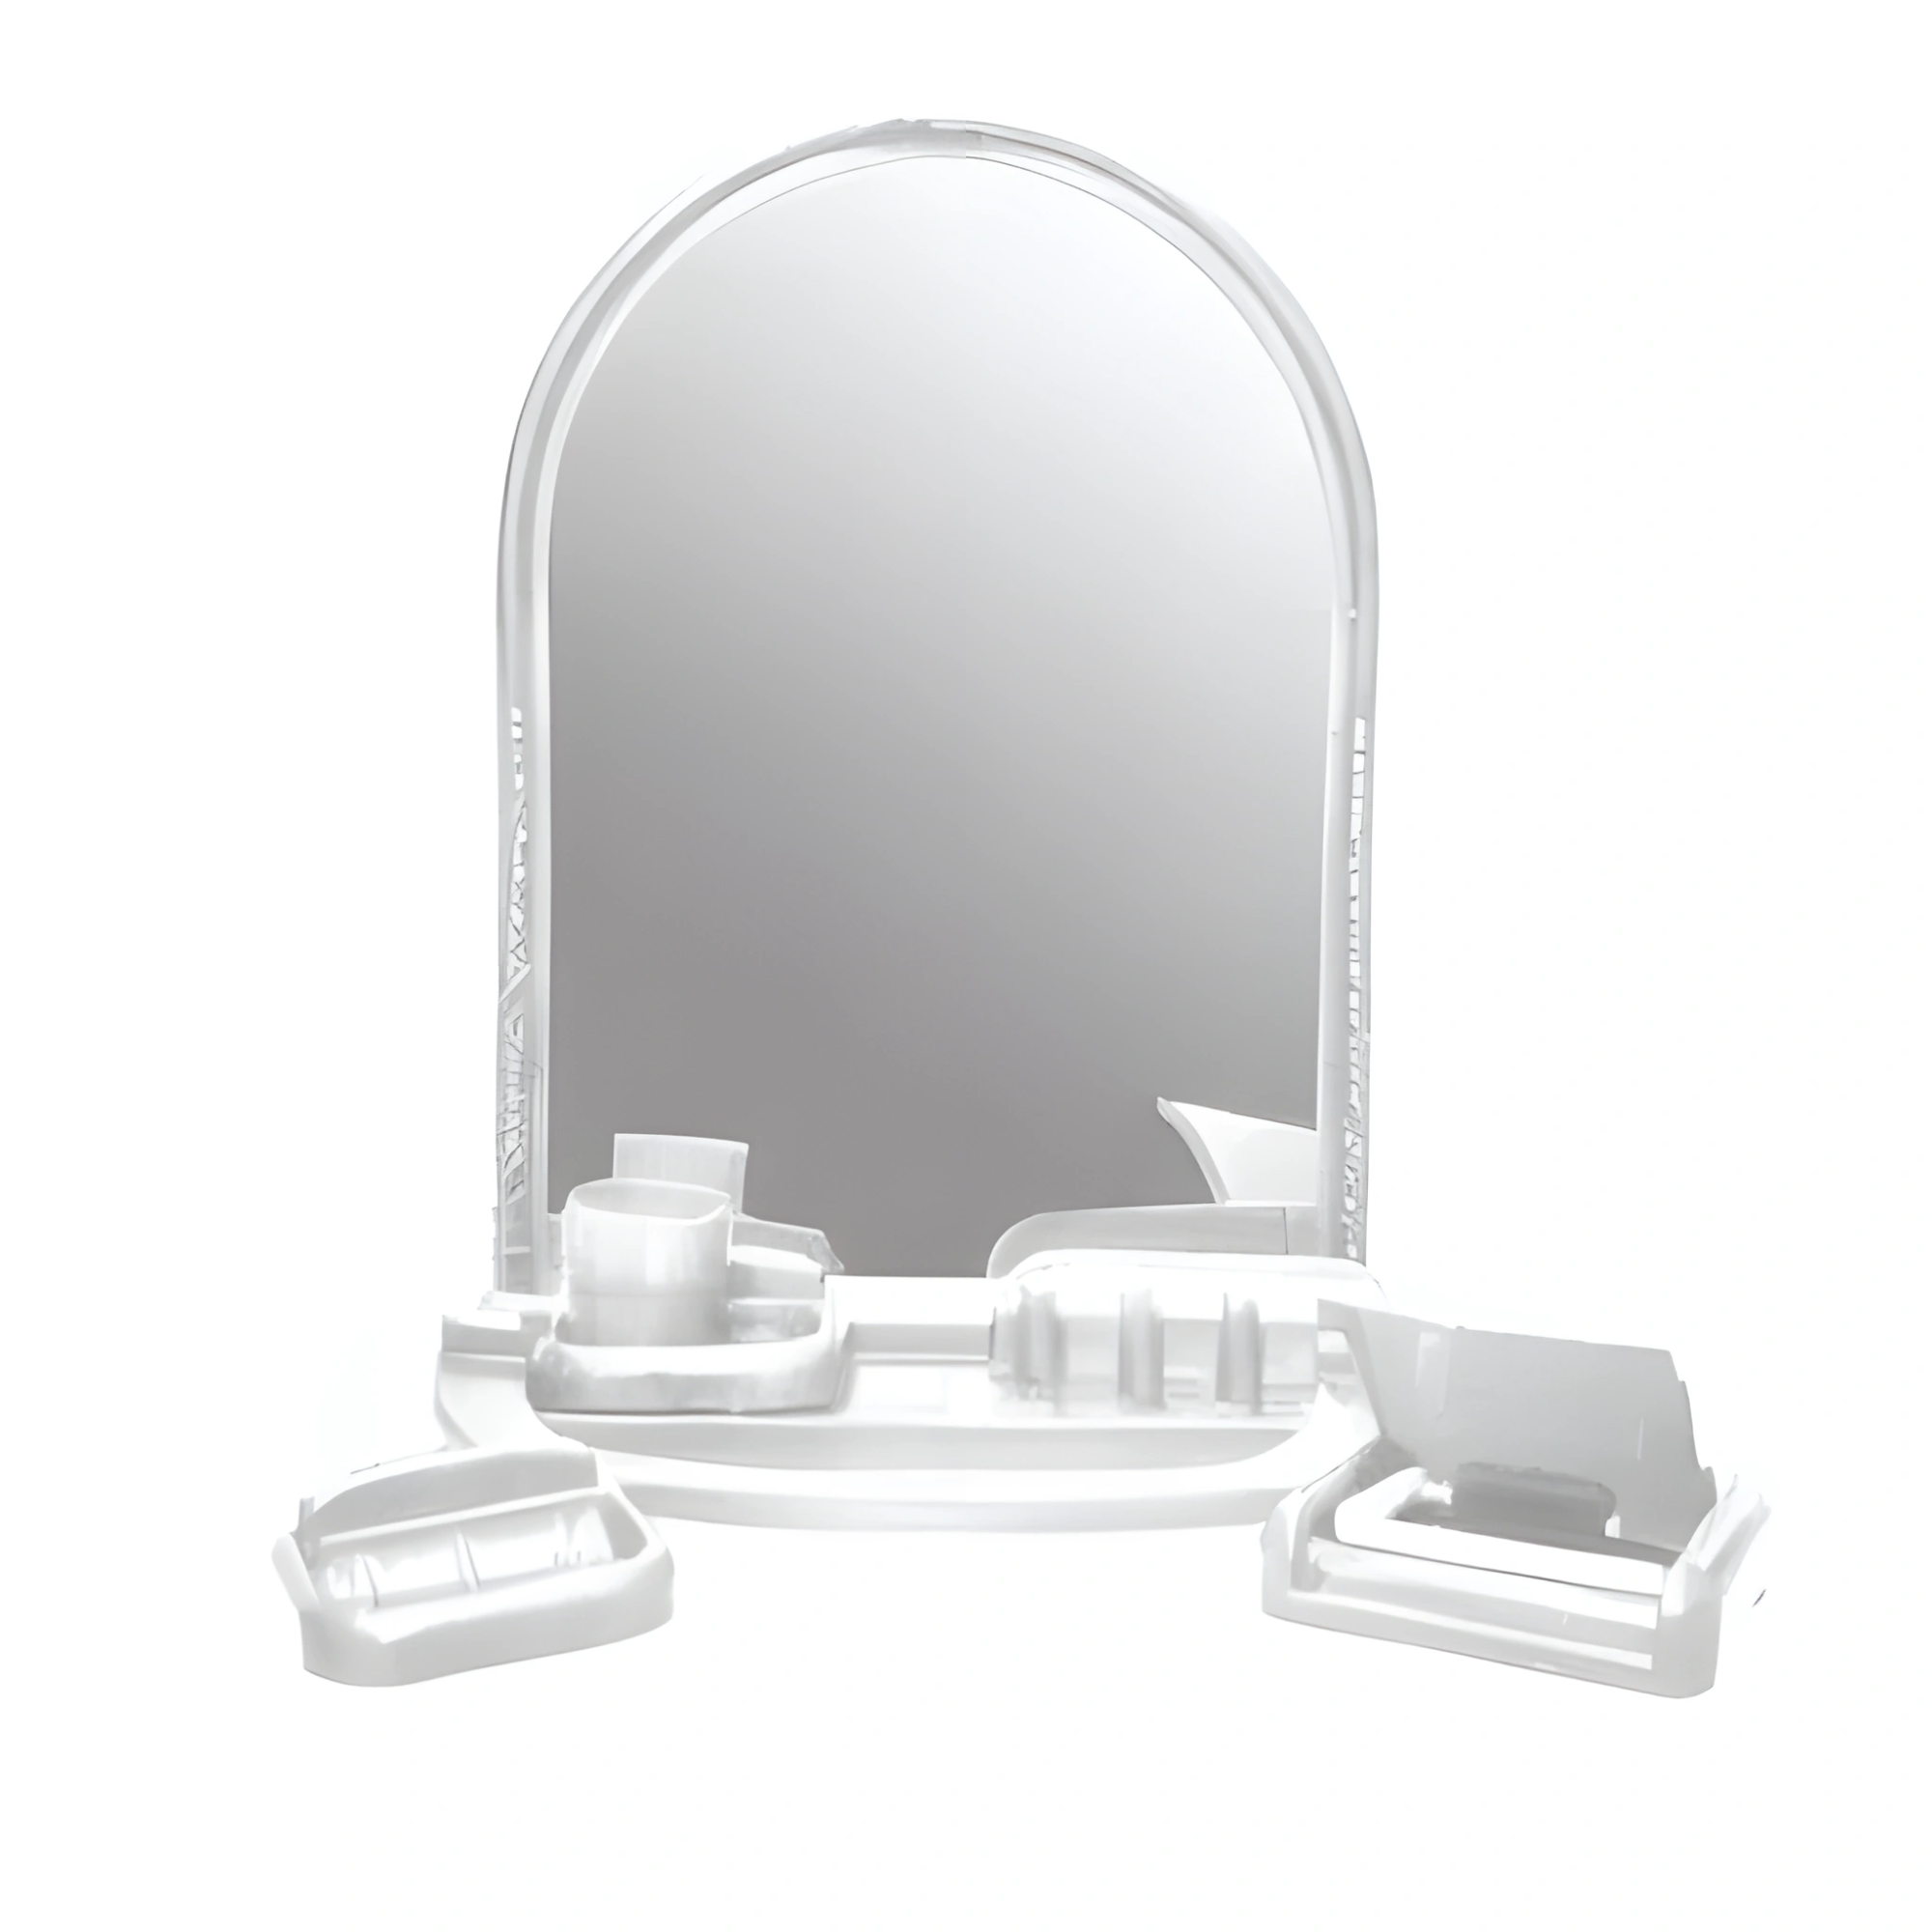 Зеркало для ванной цены. Набор ПМ Д/ванной комнаты 8пр с зеркалом Adria 2001-00. Набор для ванной Адрия 2003 с зеркалом/5. Зеркальный набор для ванной белый, 2001 «Adria». Зеркальный набор Олимпия белый.